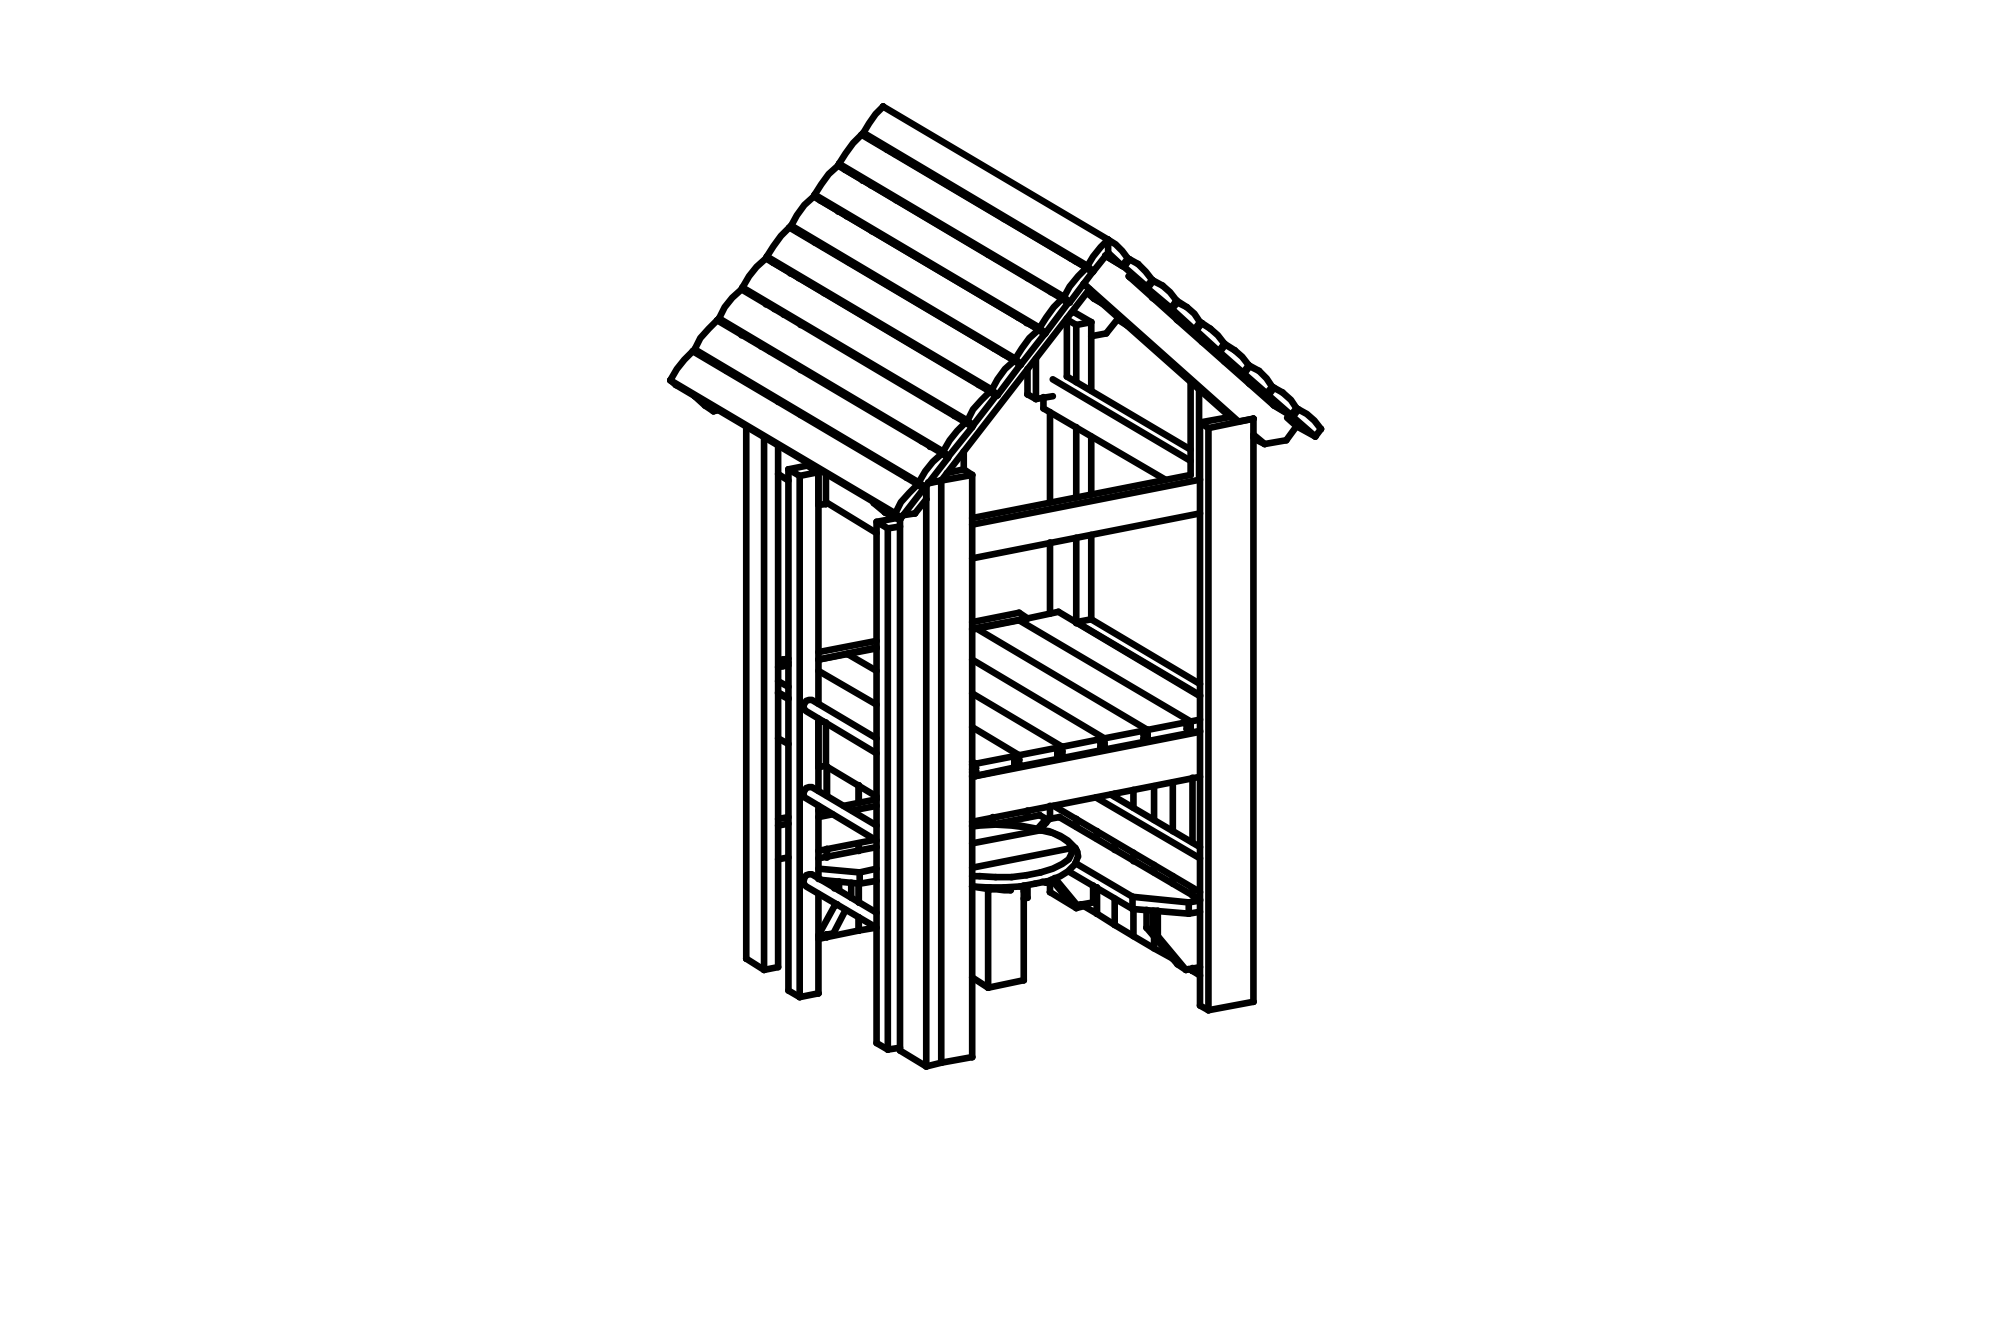 Small Platform Hut with furniture 